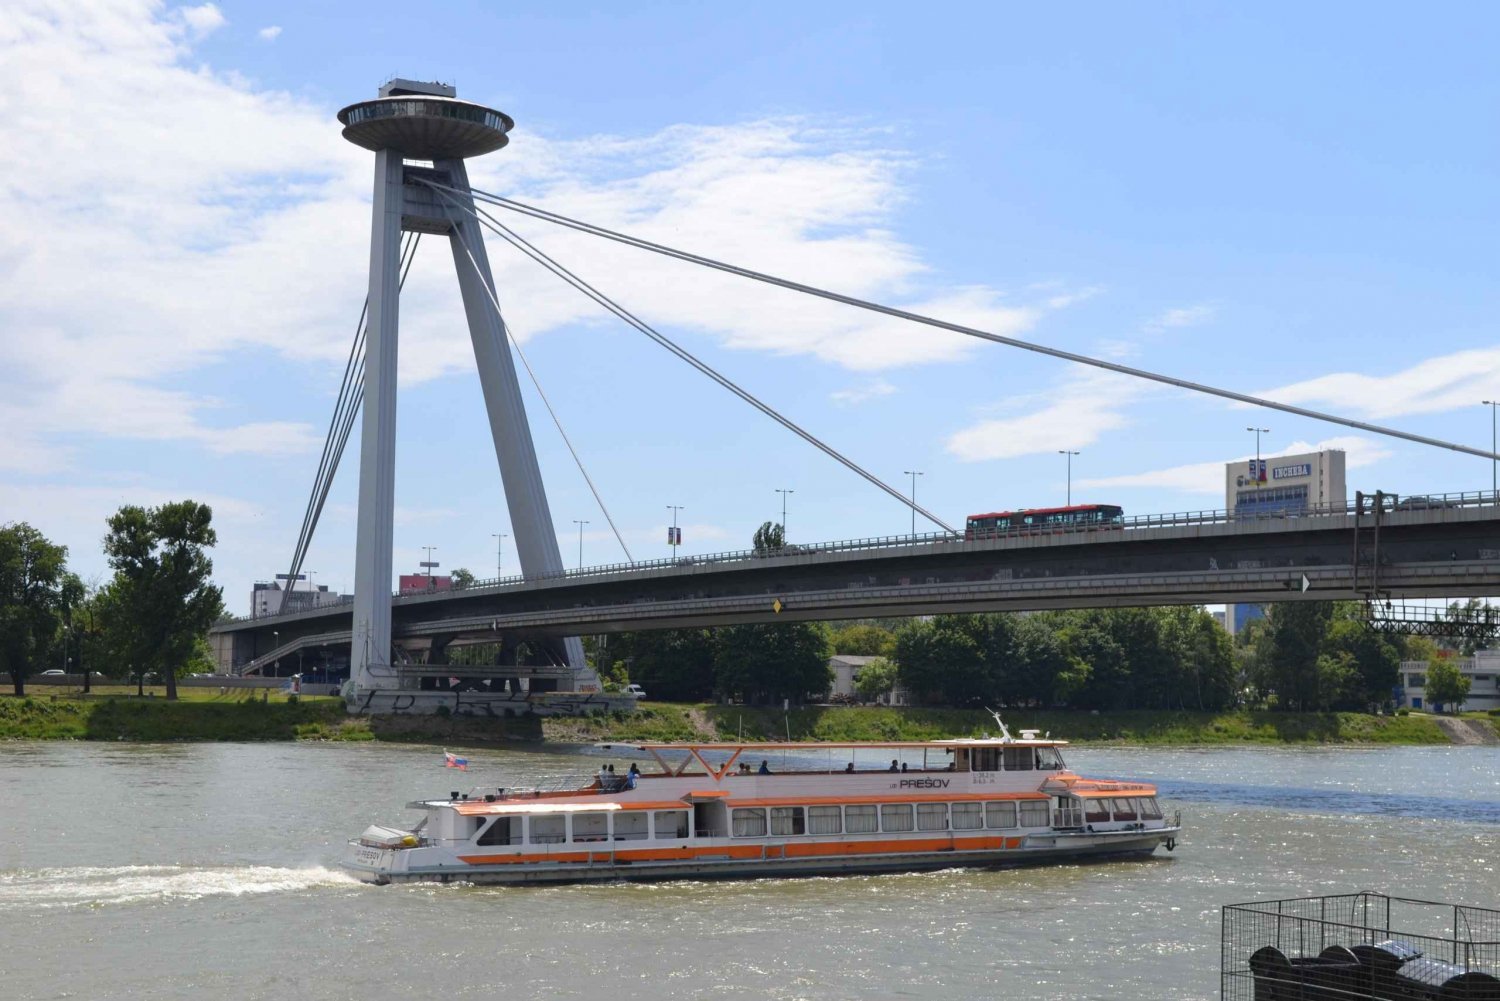 Bratislava - Hainburg - Bratislava: Cruise on the Danube